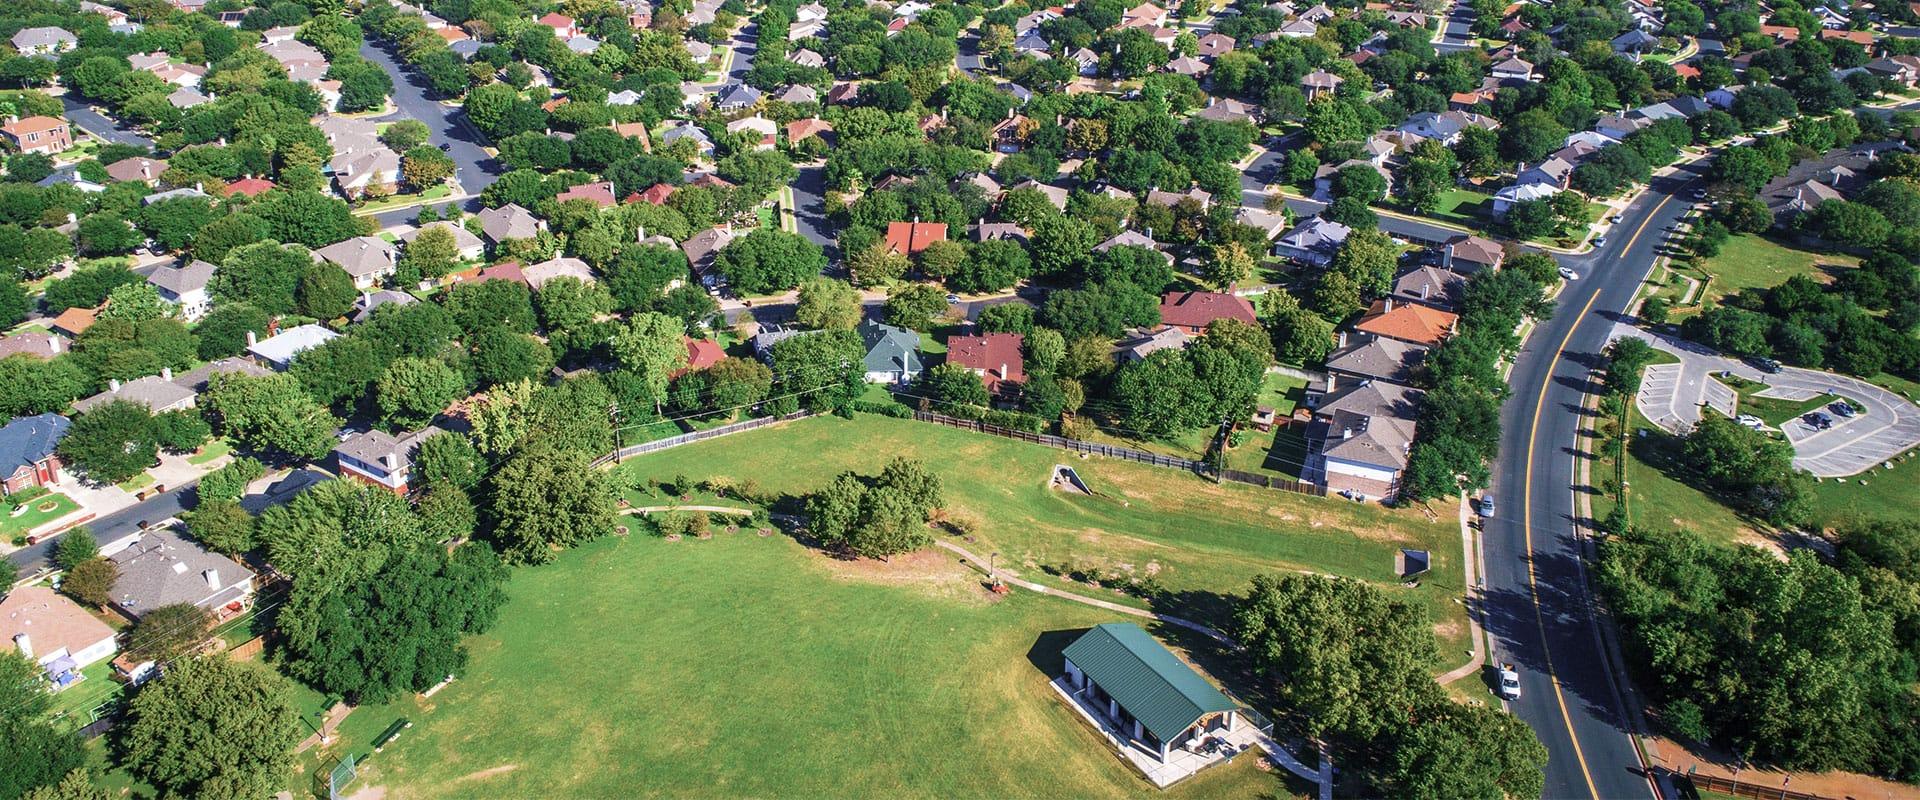 overhead view of a neighborhood in dallas texas